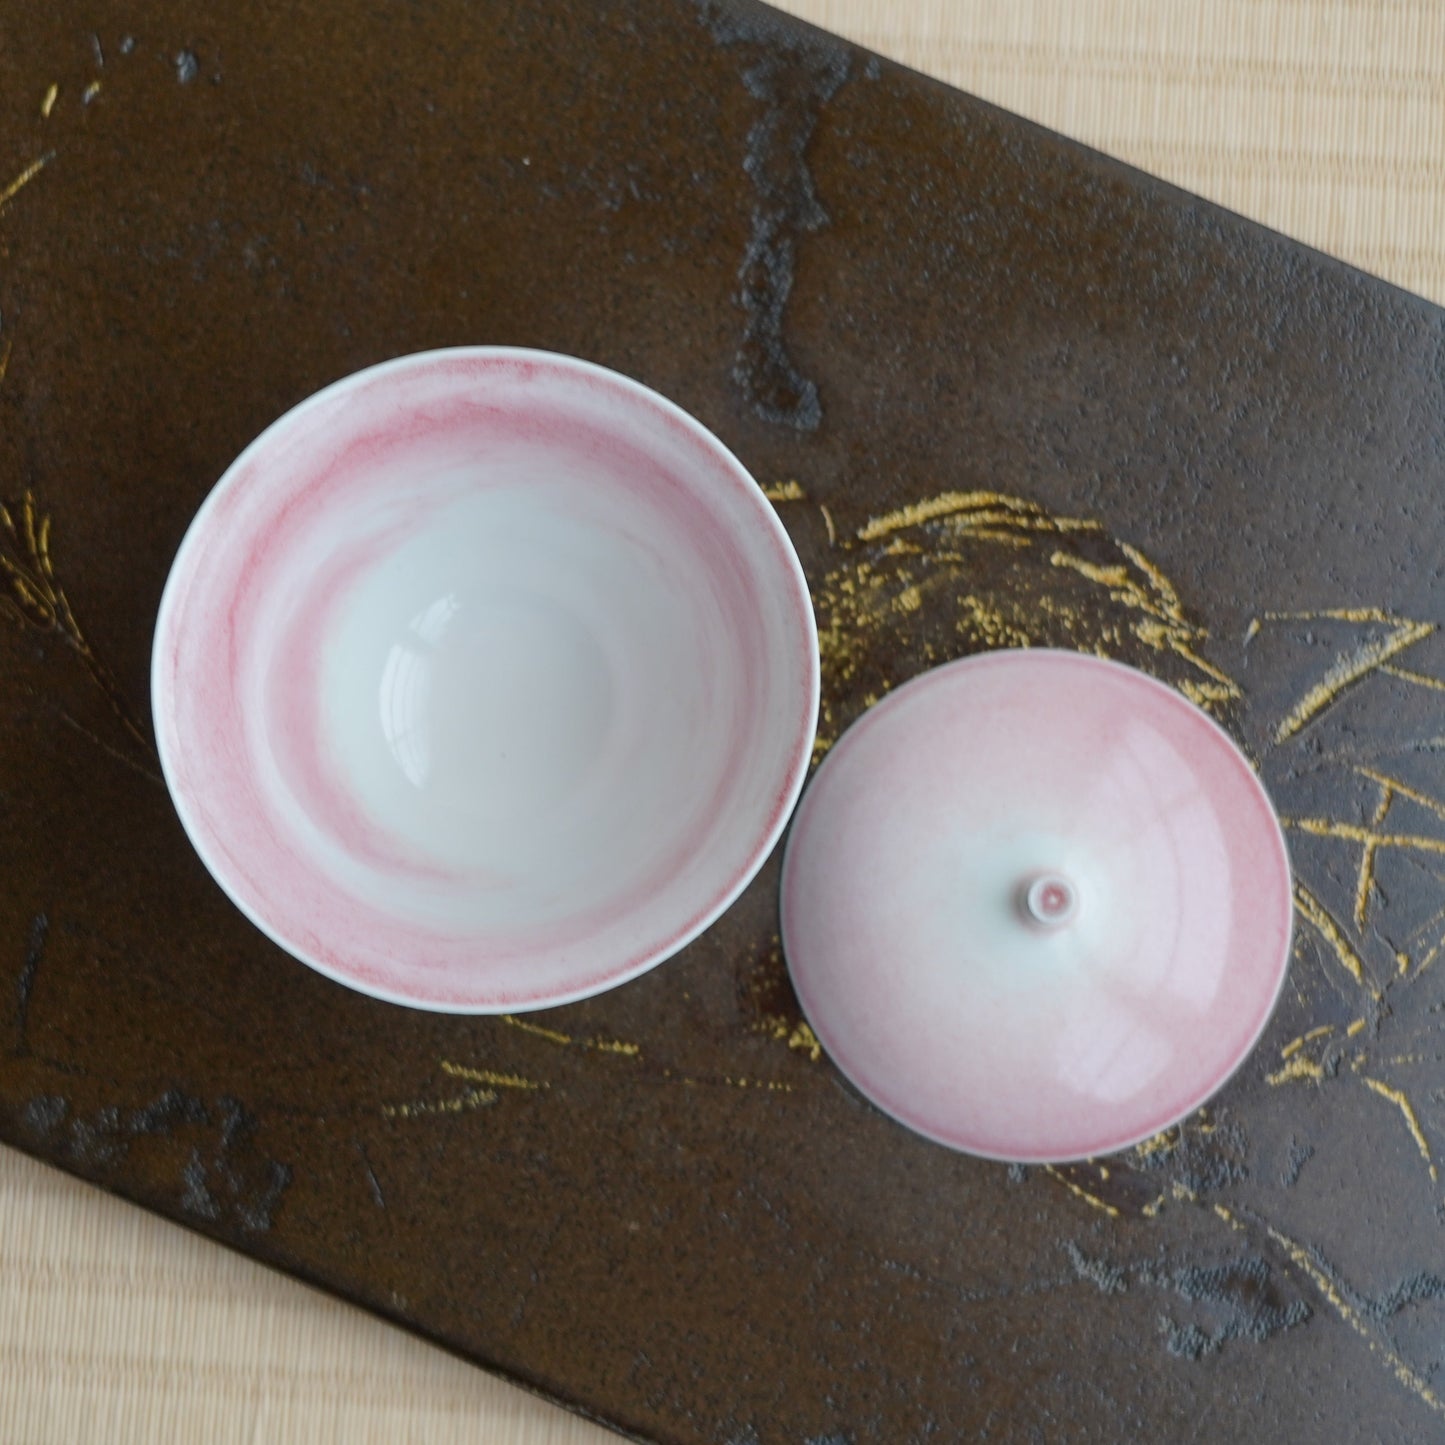 High-Temperature Reduction Fired Blue Glaze Ceramic tea bowl